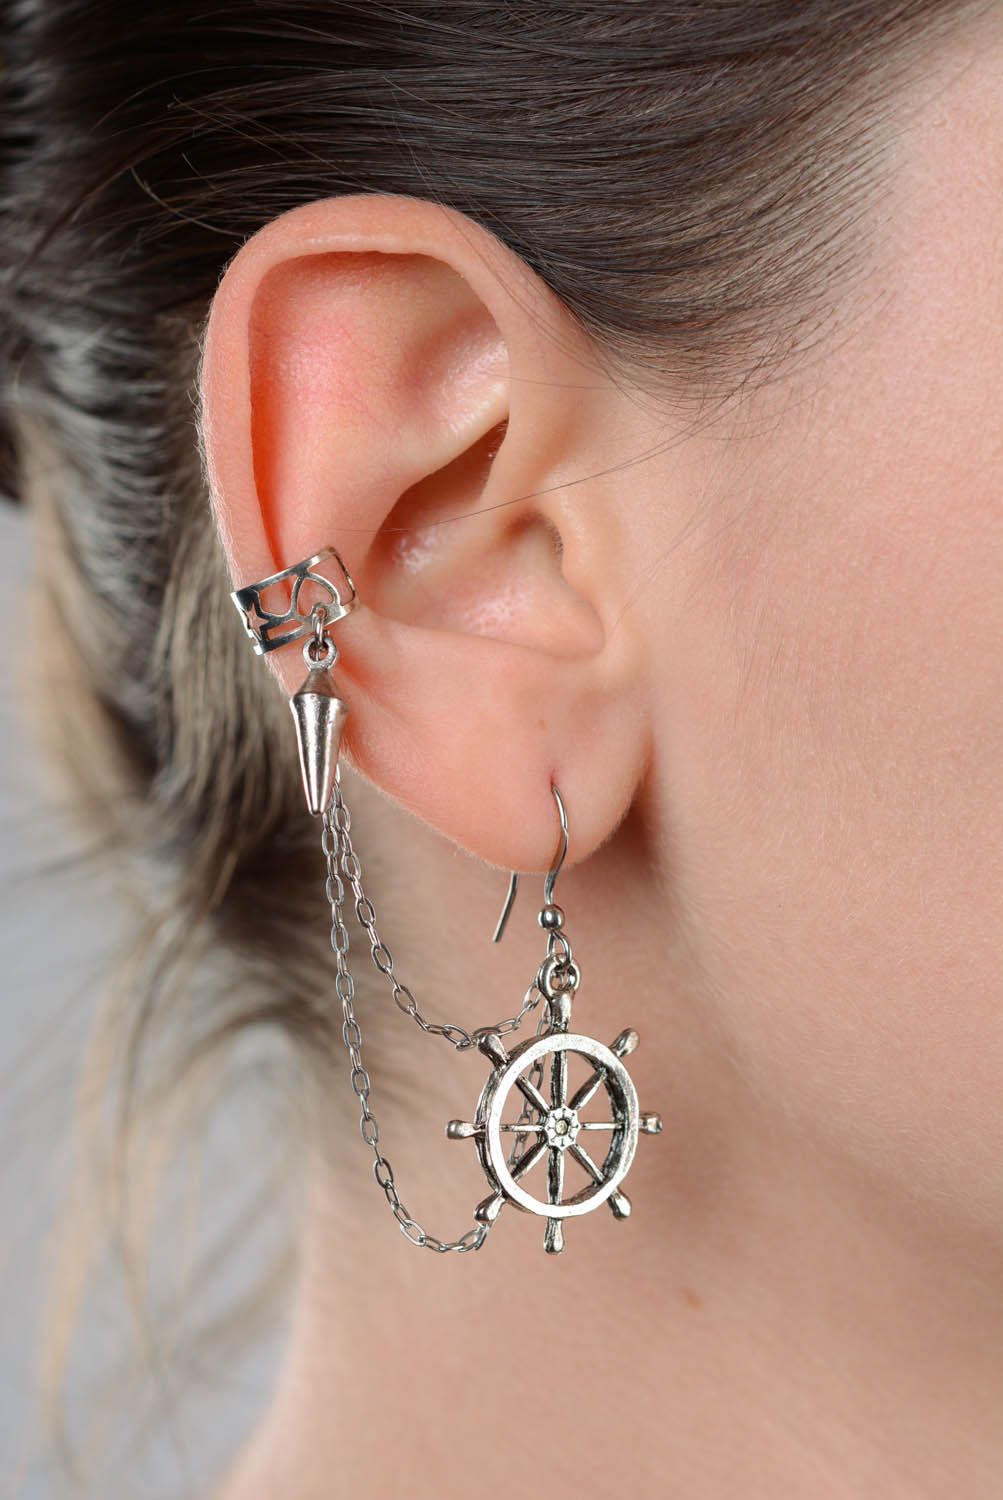 Cuff earrings in marine style photo 3